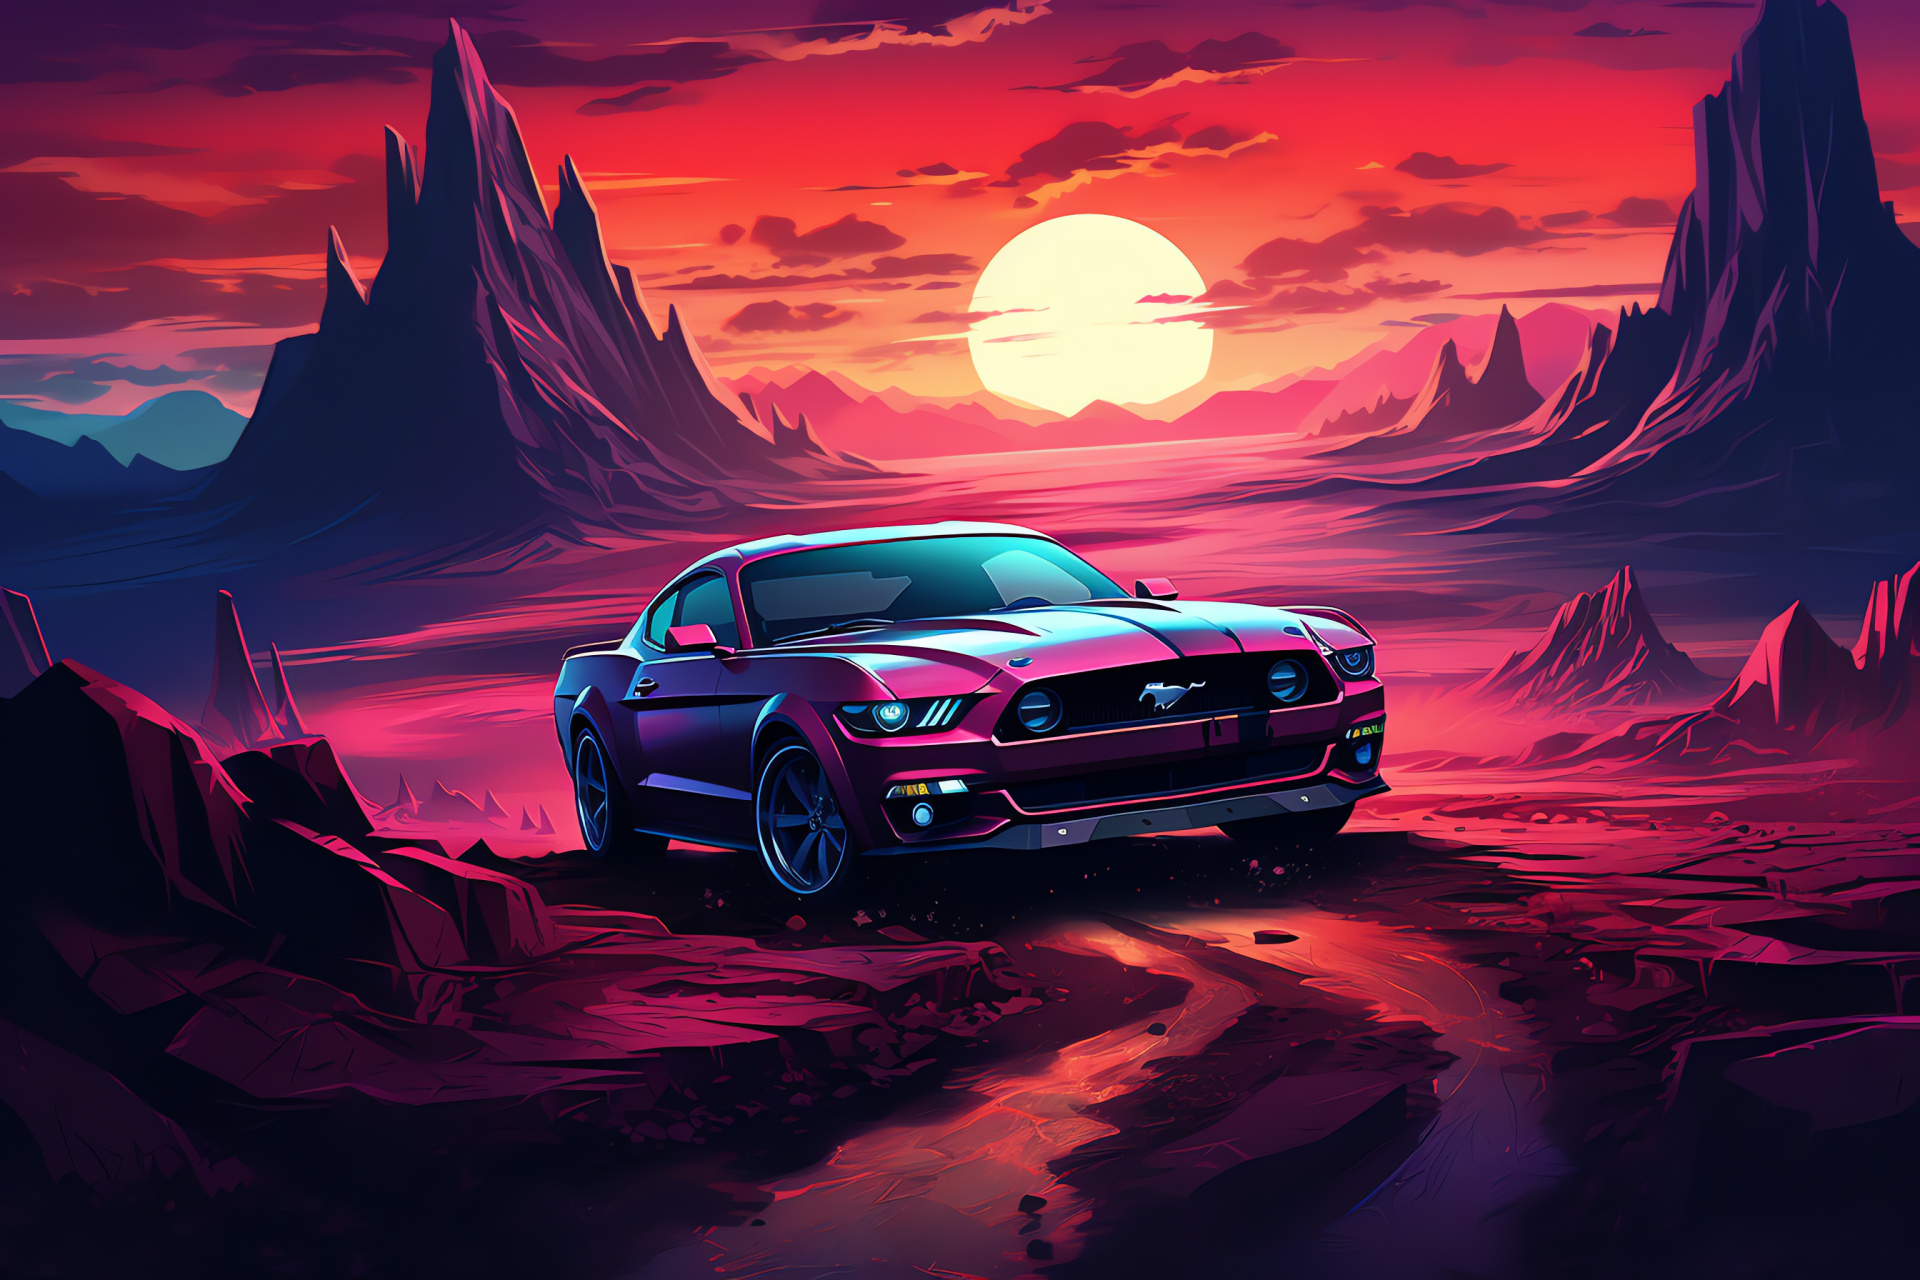 Mustang exploration, Foreign planet terrain, Vivid trichromatic landscape, Expansive car visual, Novelty setting, HD Desktop Image